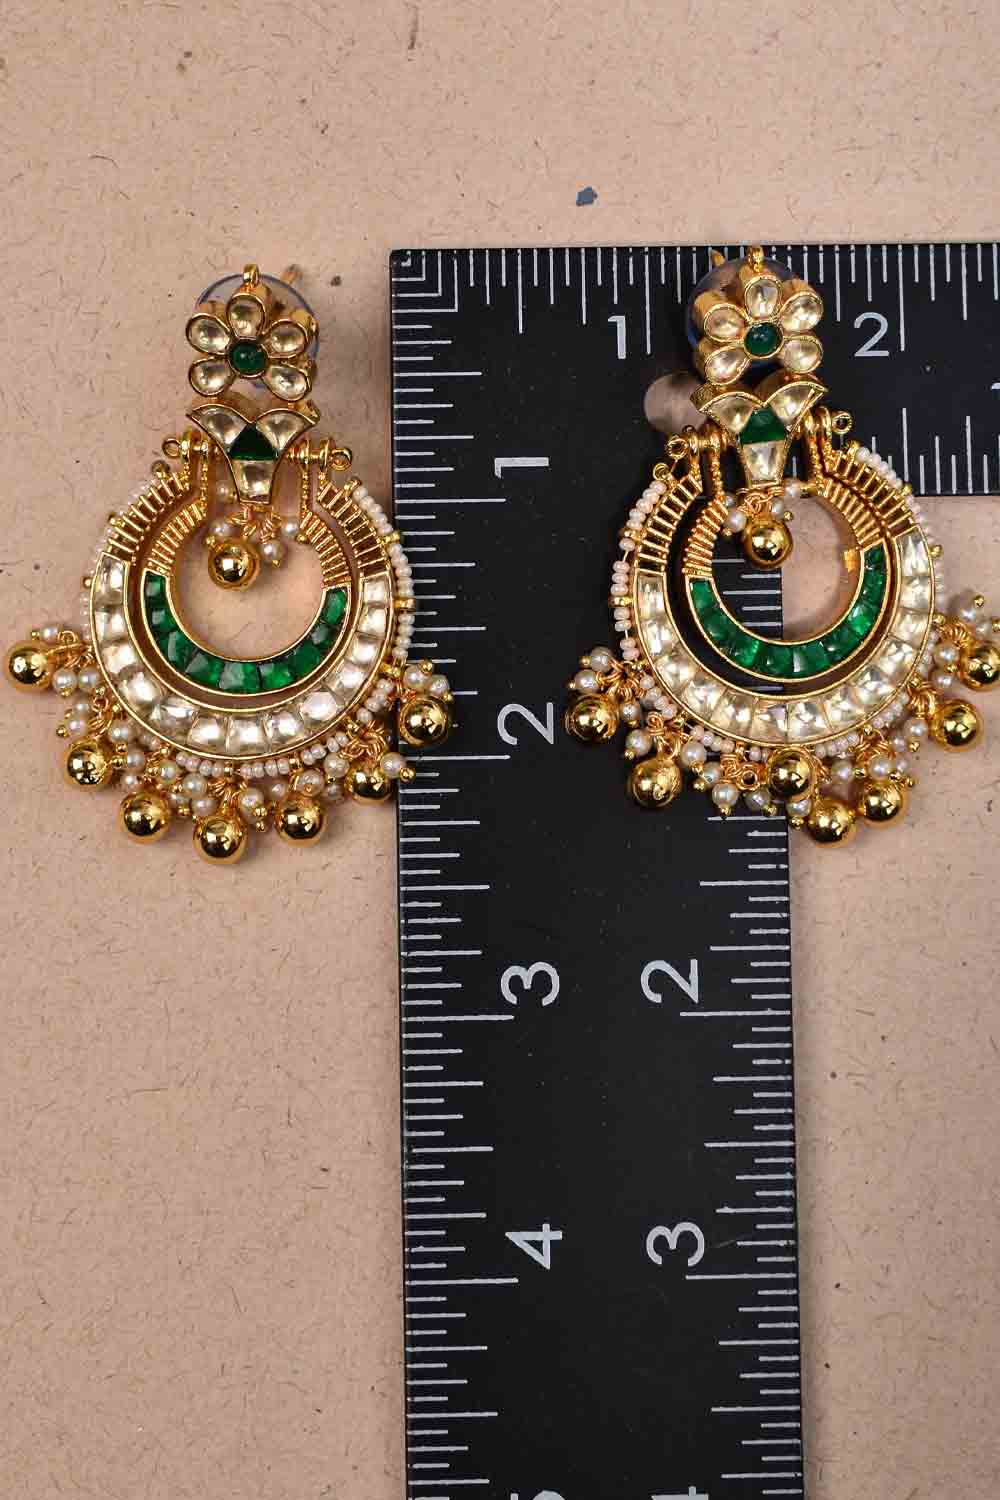 Chandbali Earrings with Green and White Kundan Jadau set stones and microplated base